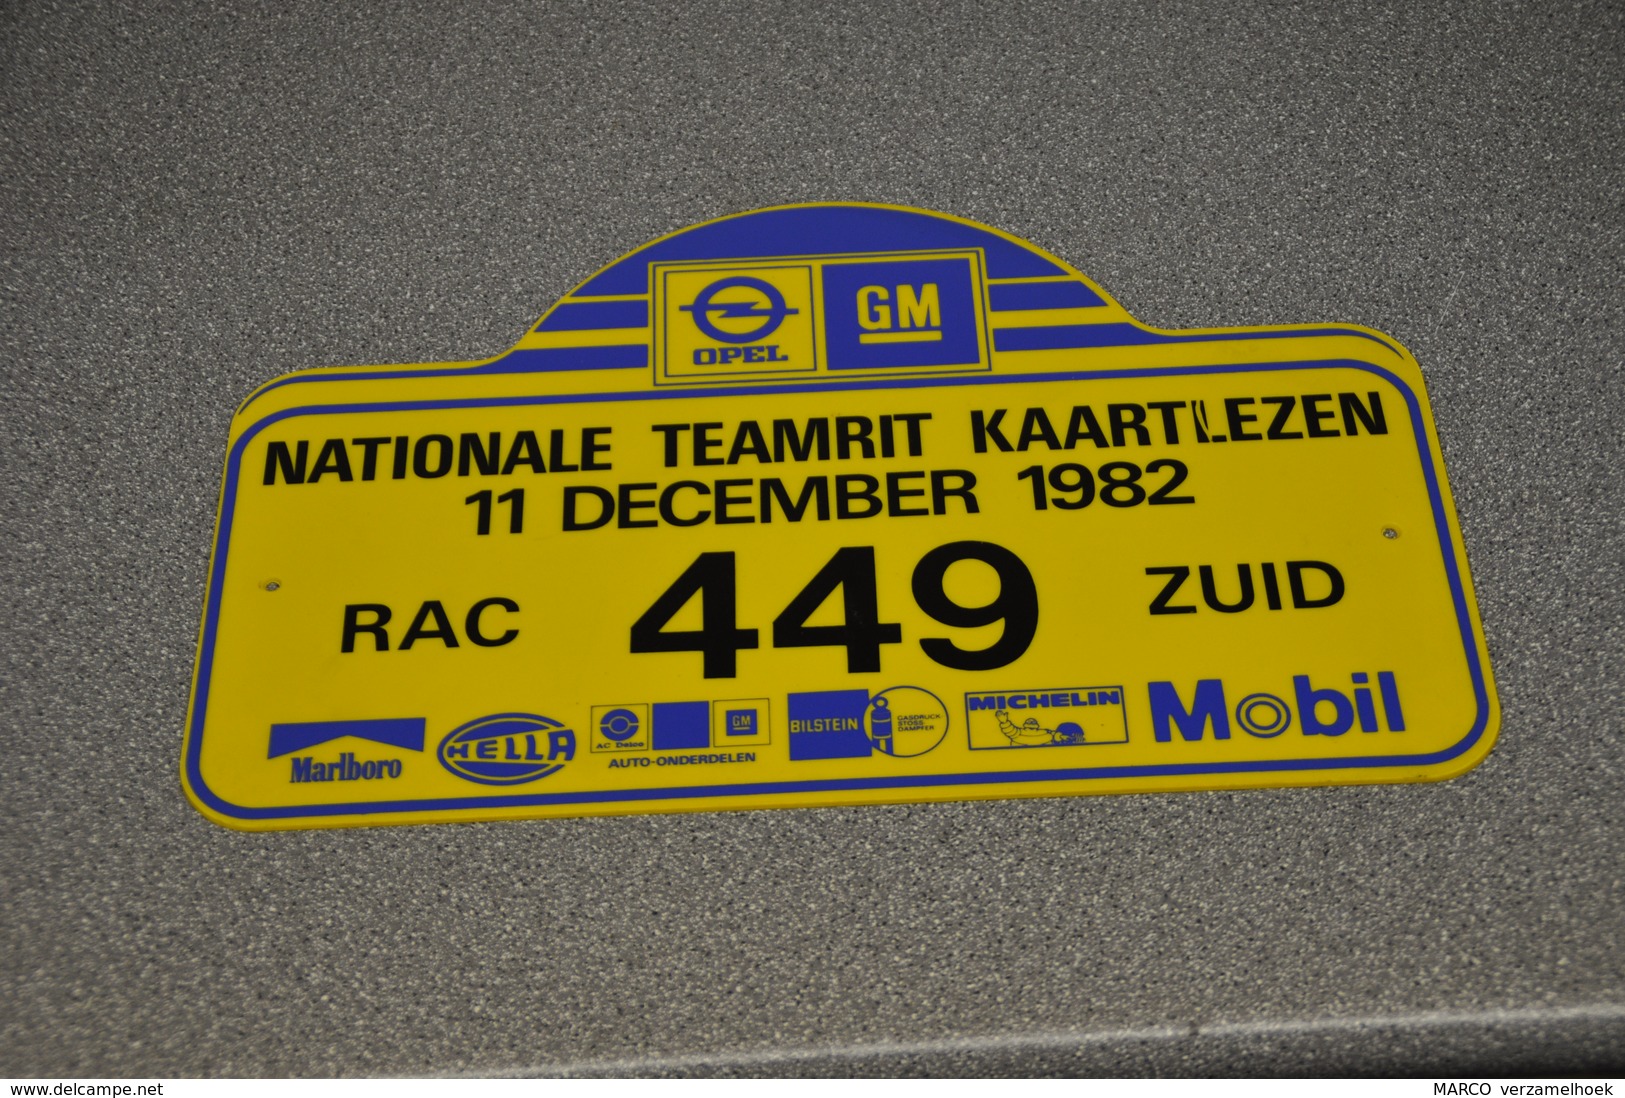 Rally Plaat-rallye Plaque Plastic: Nat. Teamrit 1982 RAC-zuid Opel-GM-marlboro-hella-michelin-mobil - Targhe Rallye